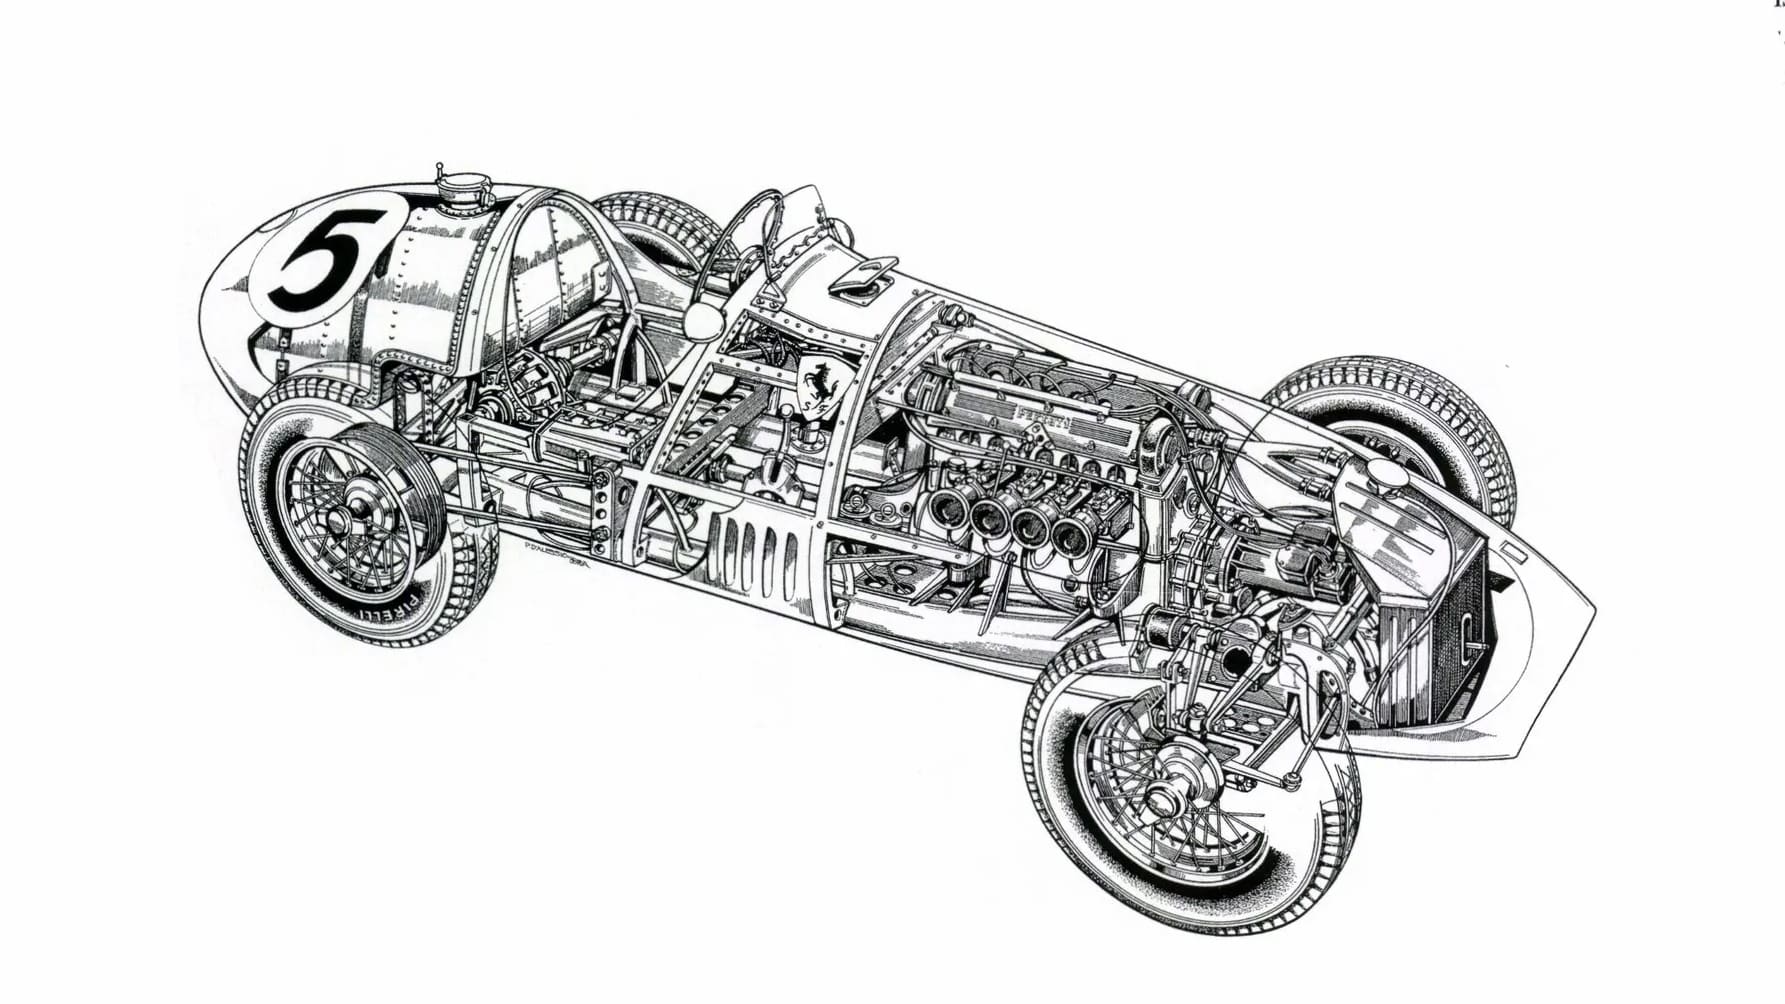 Ferrari 500 illustration